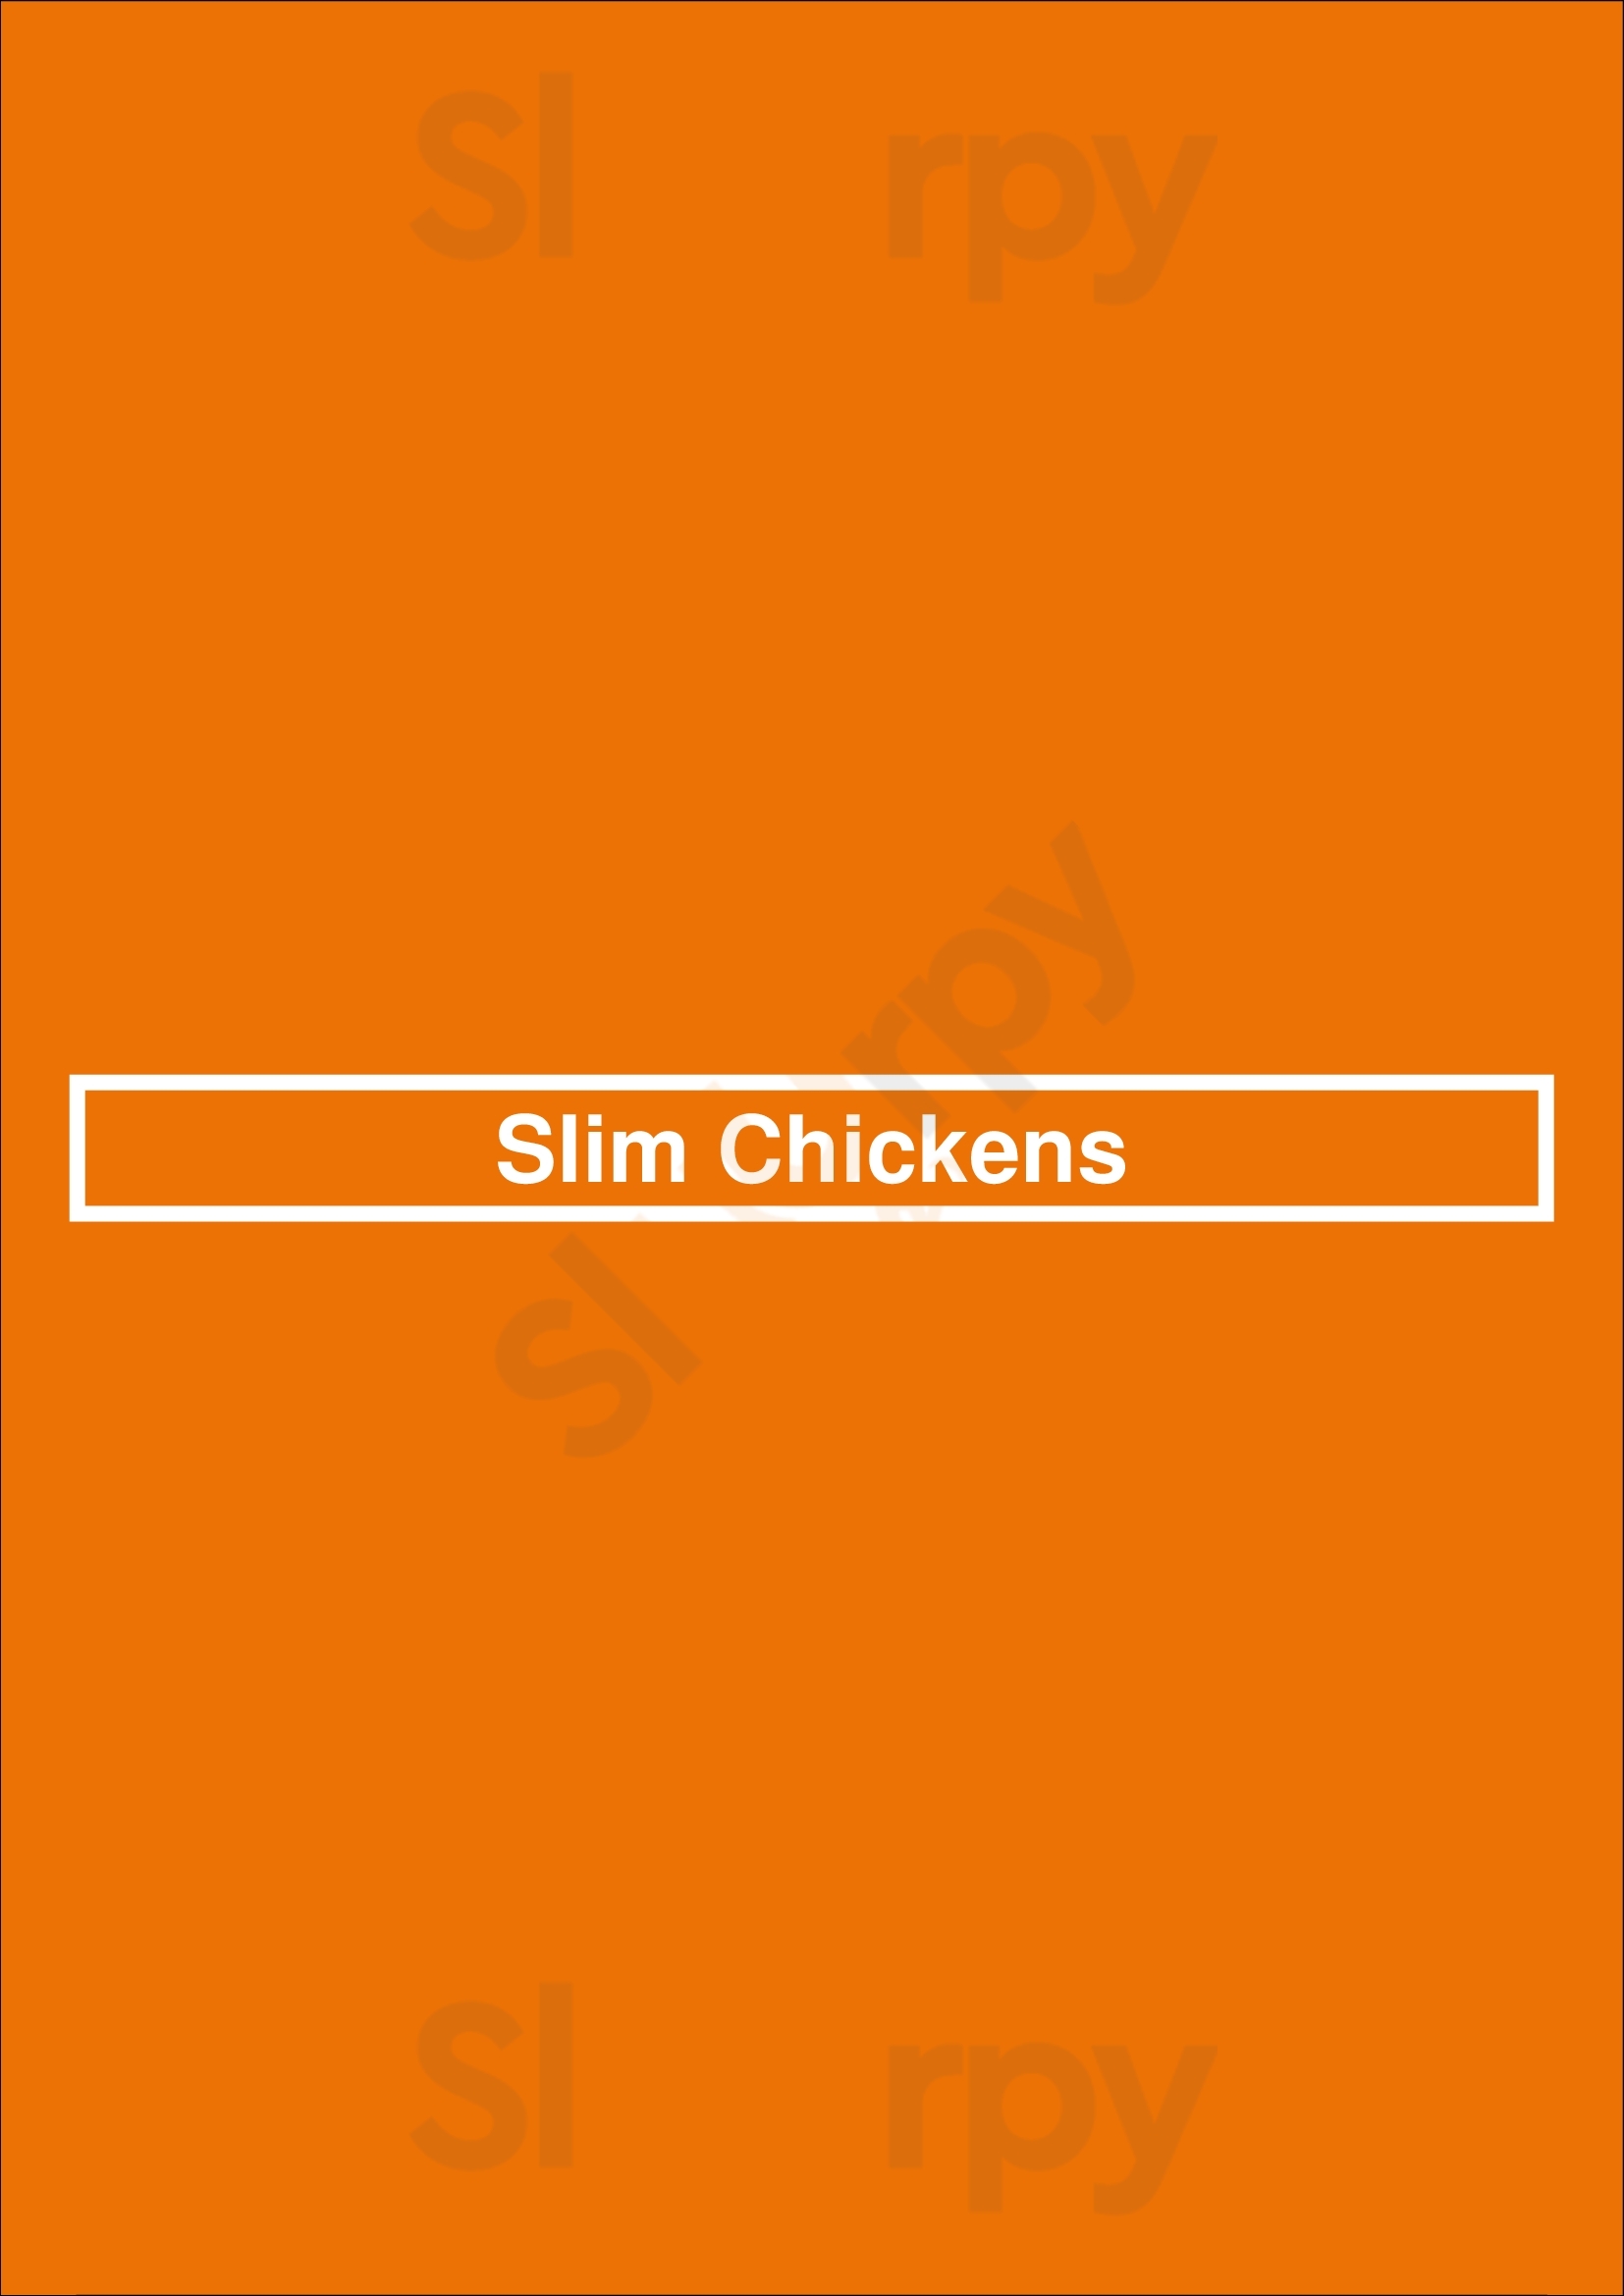 Slim Chickens Fort Worth Menu - 1